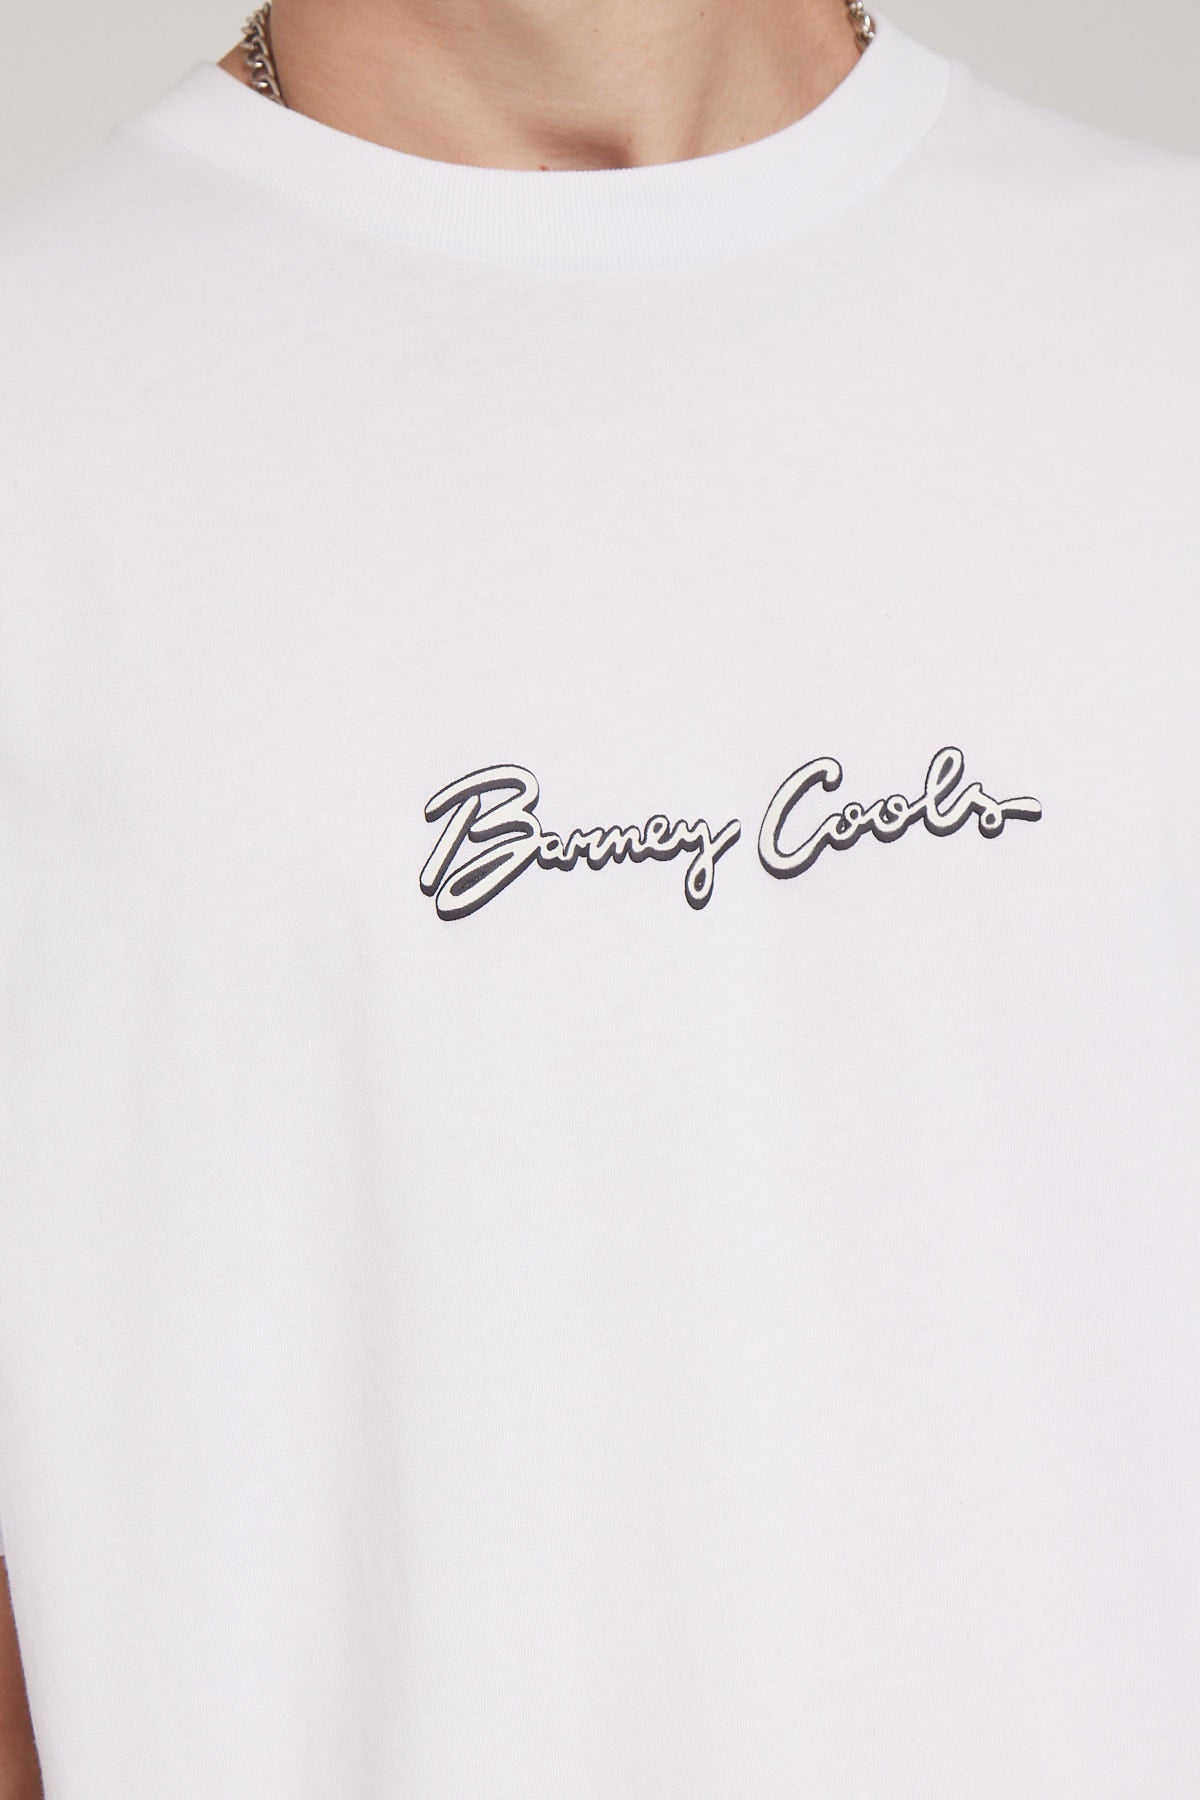 Barney Cools Autograff Tee White – Universal Store